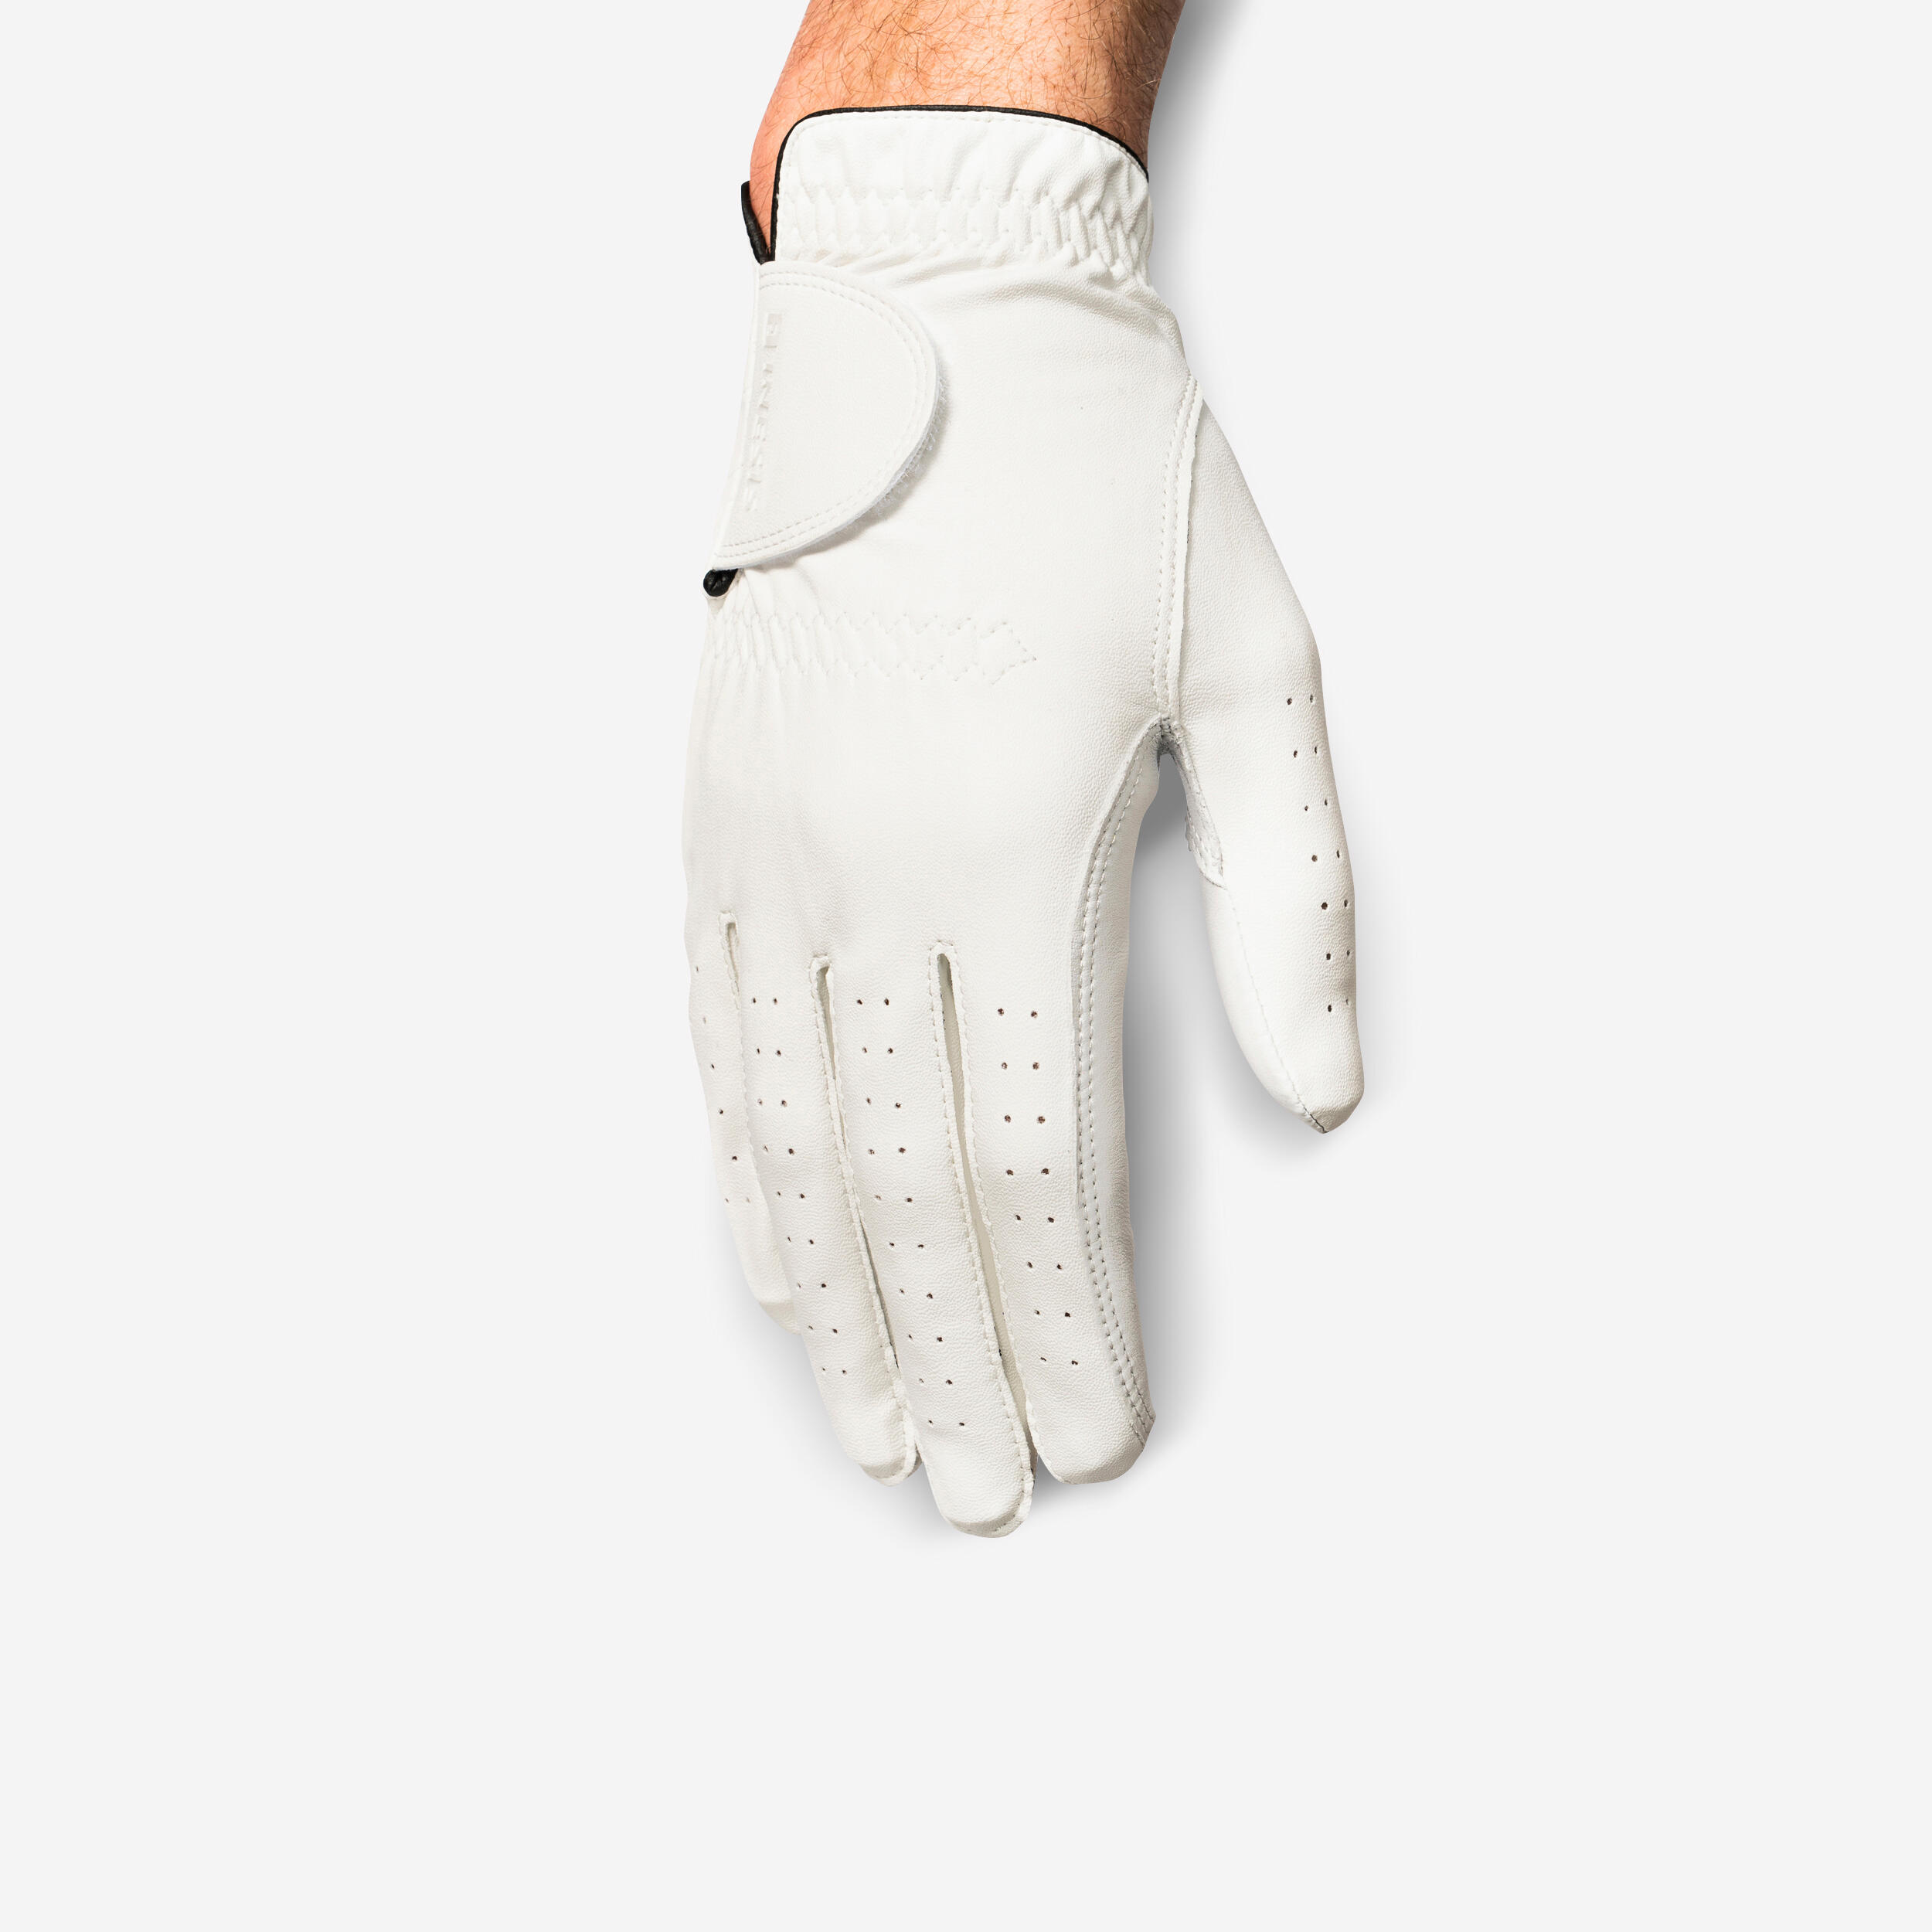 Gant de golf pour gaucher homme - Soft 500 blanc - INESIS